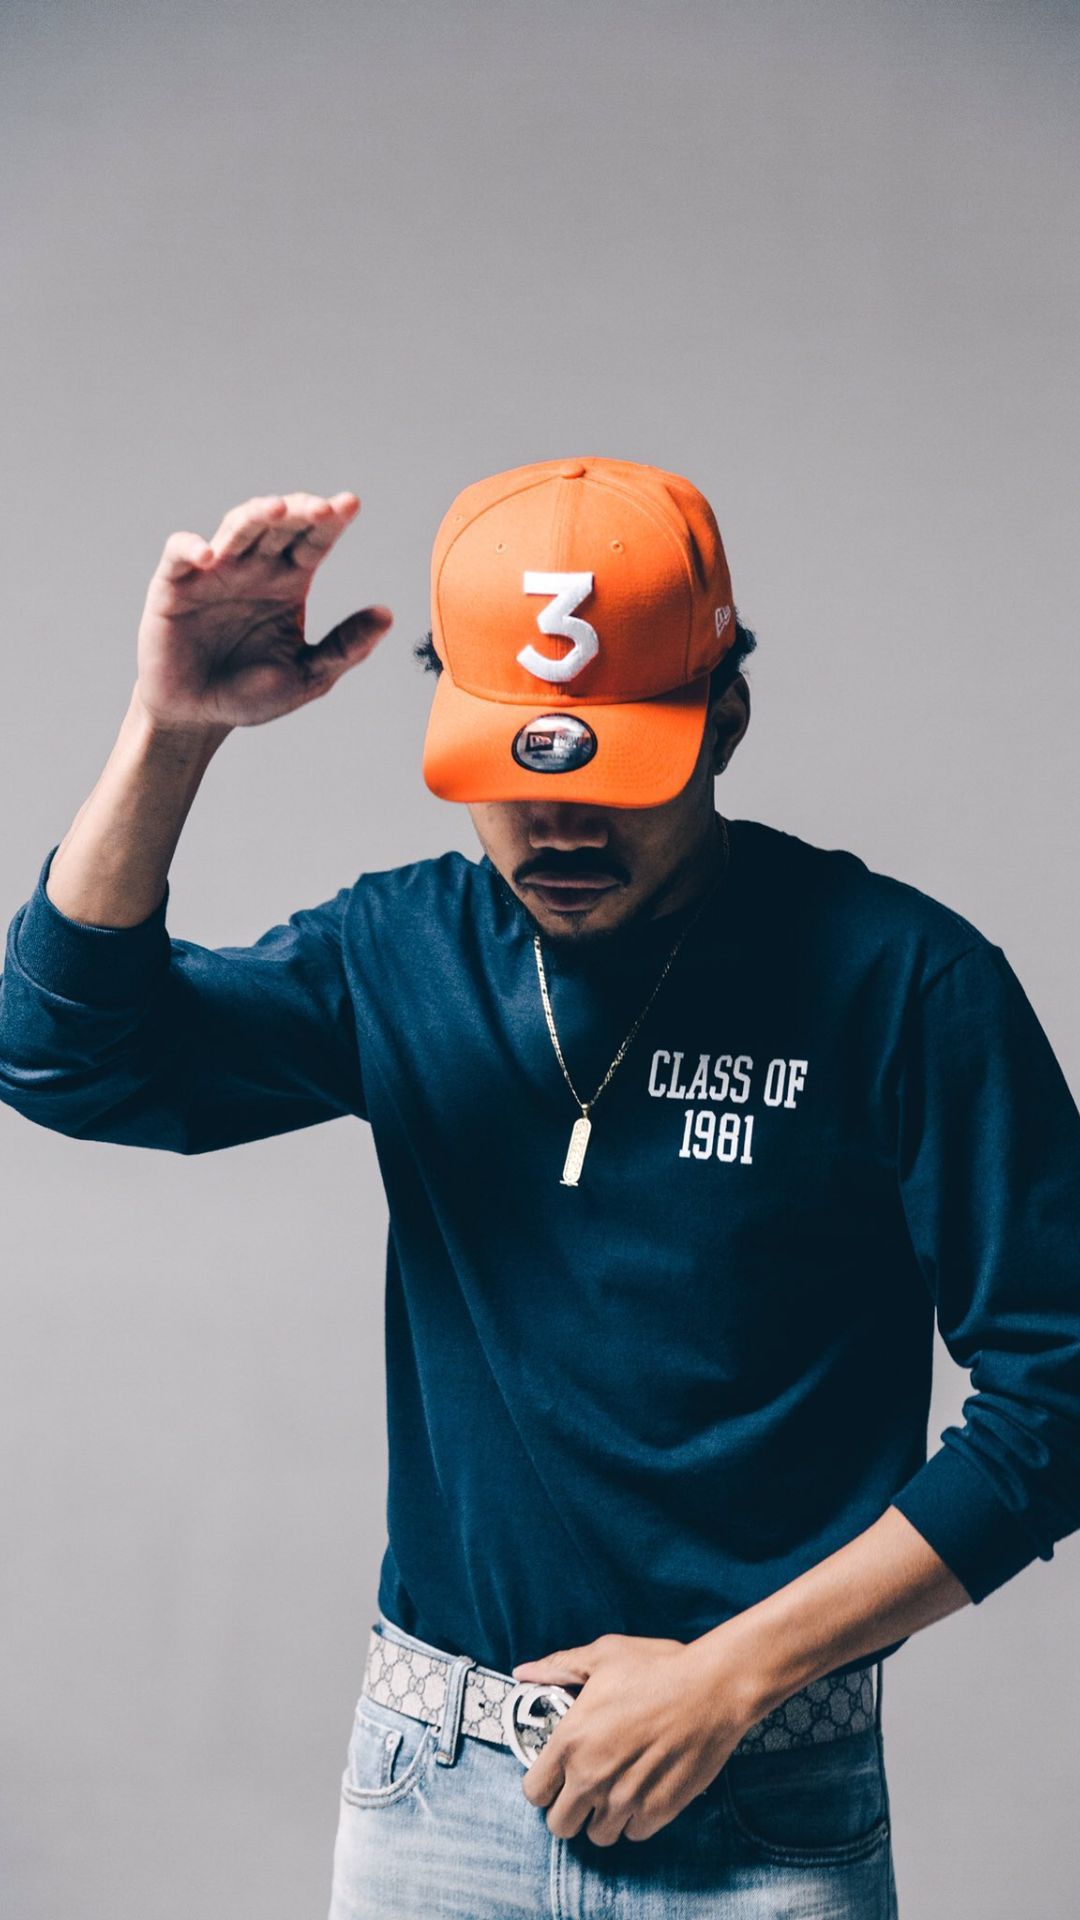 A man in an orange cap and blue shirt - Chance the Rapper